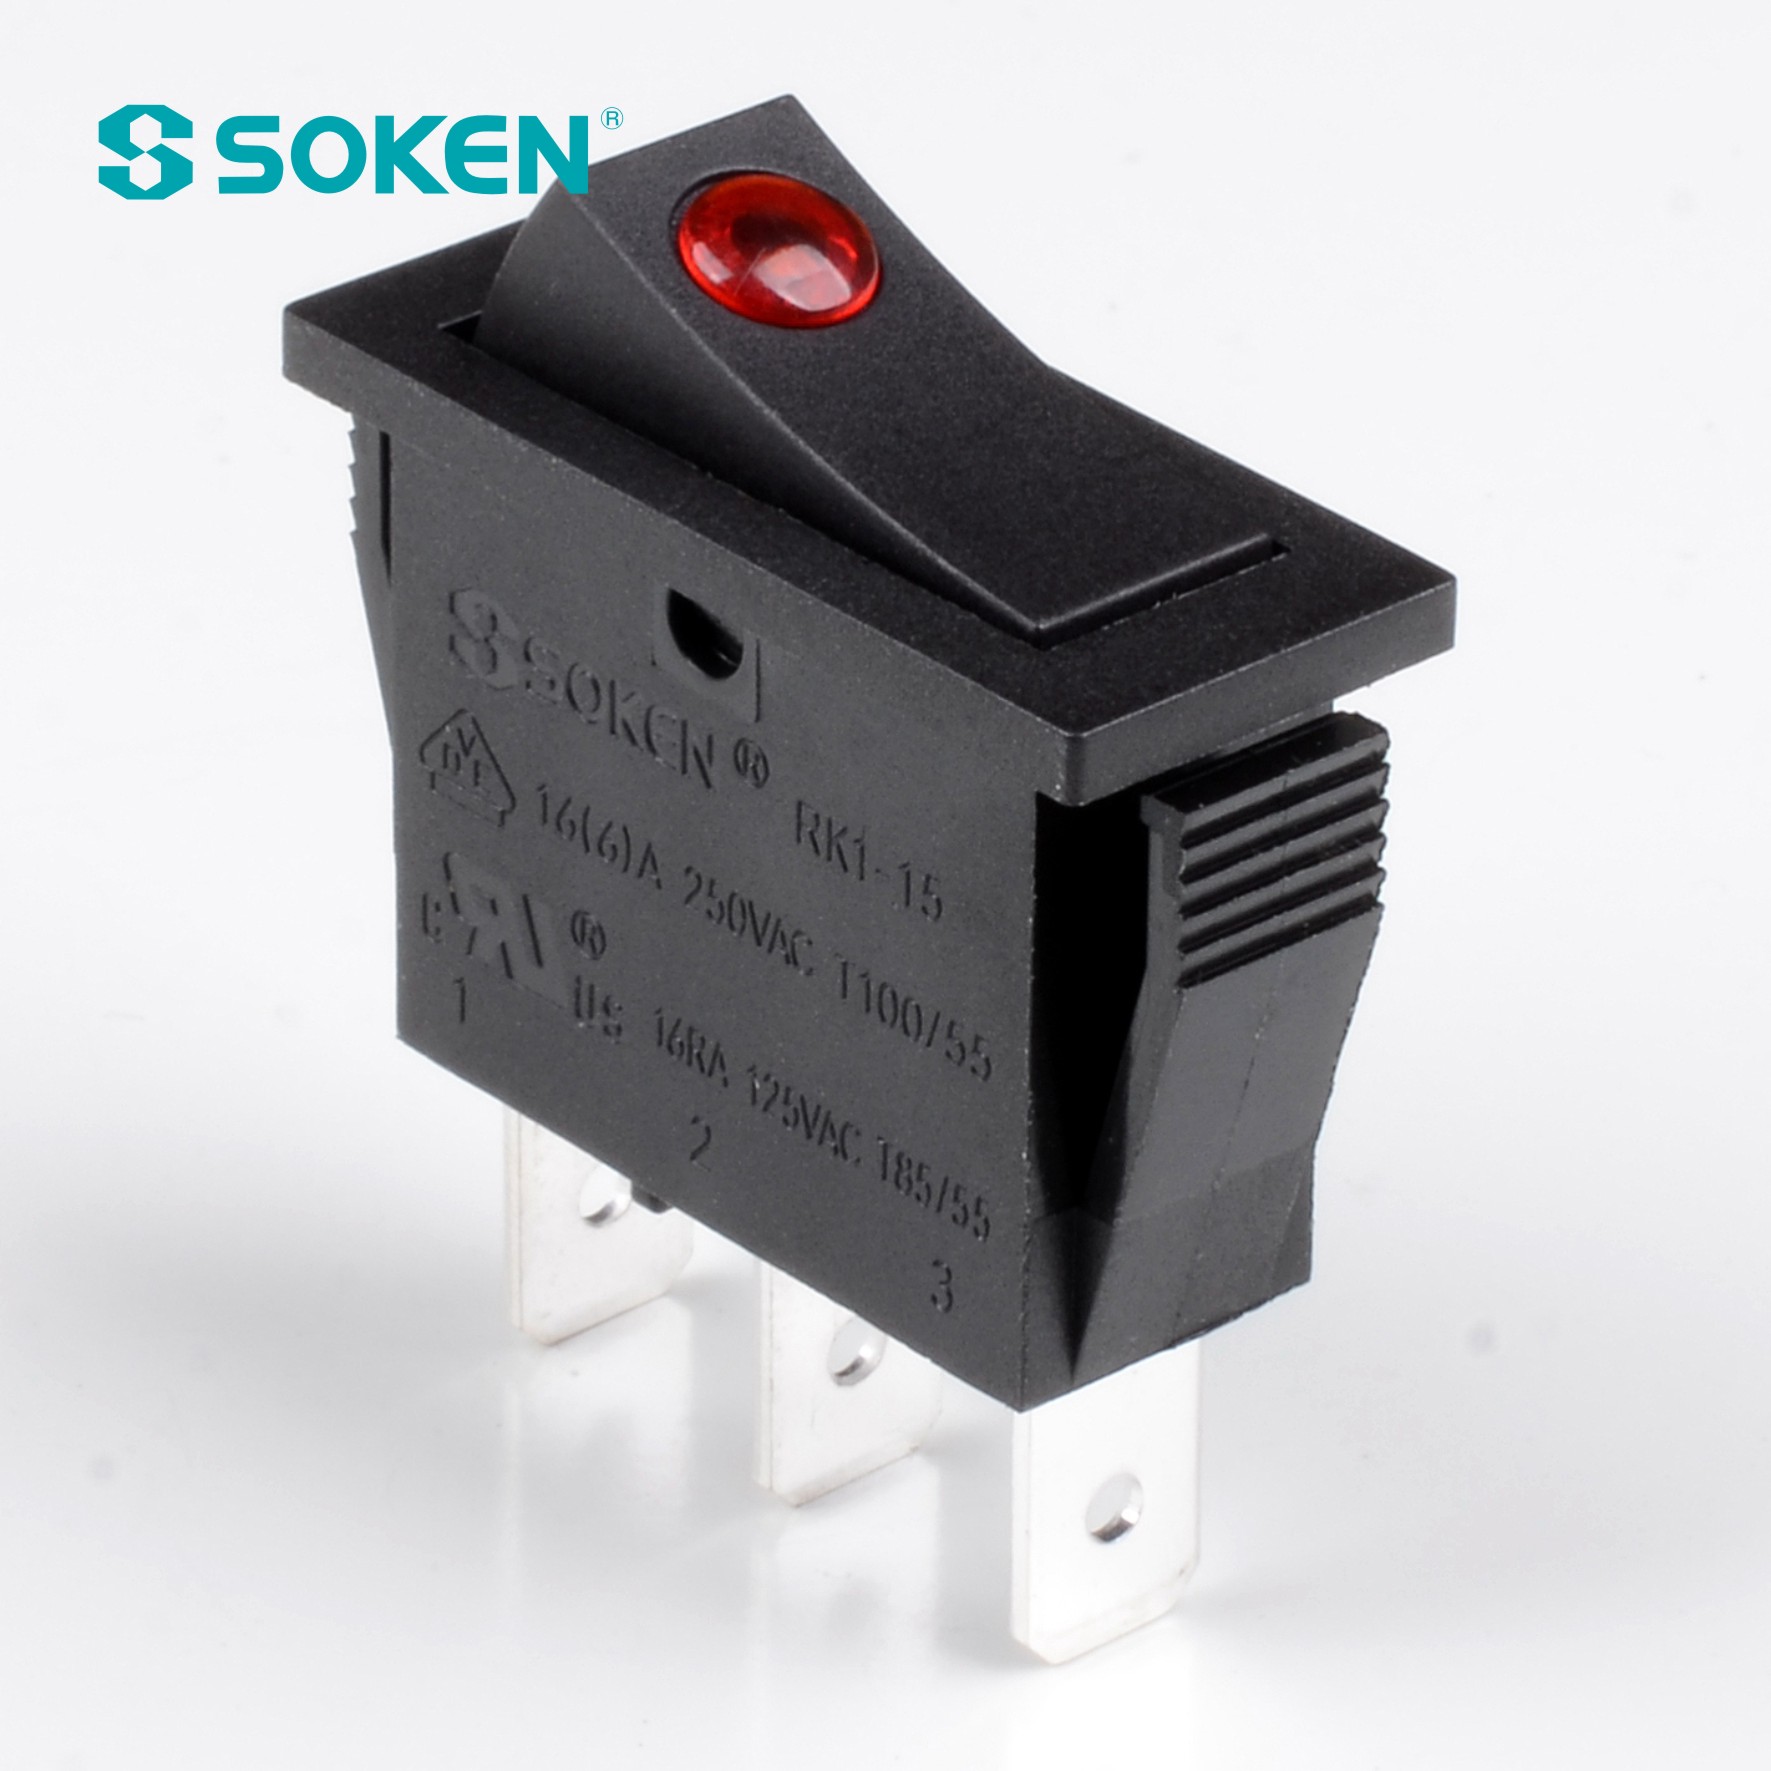 Soken Rk1-15 1X1n Lens air far Rocker Switch